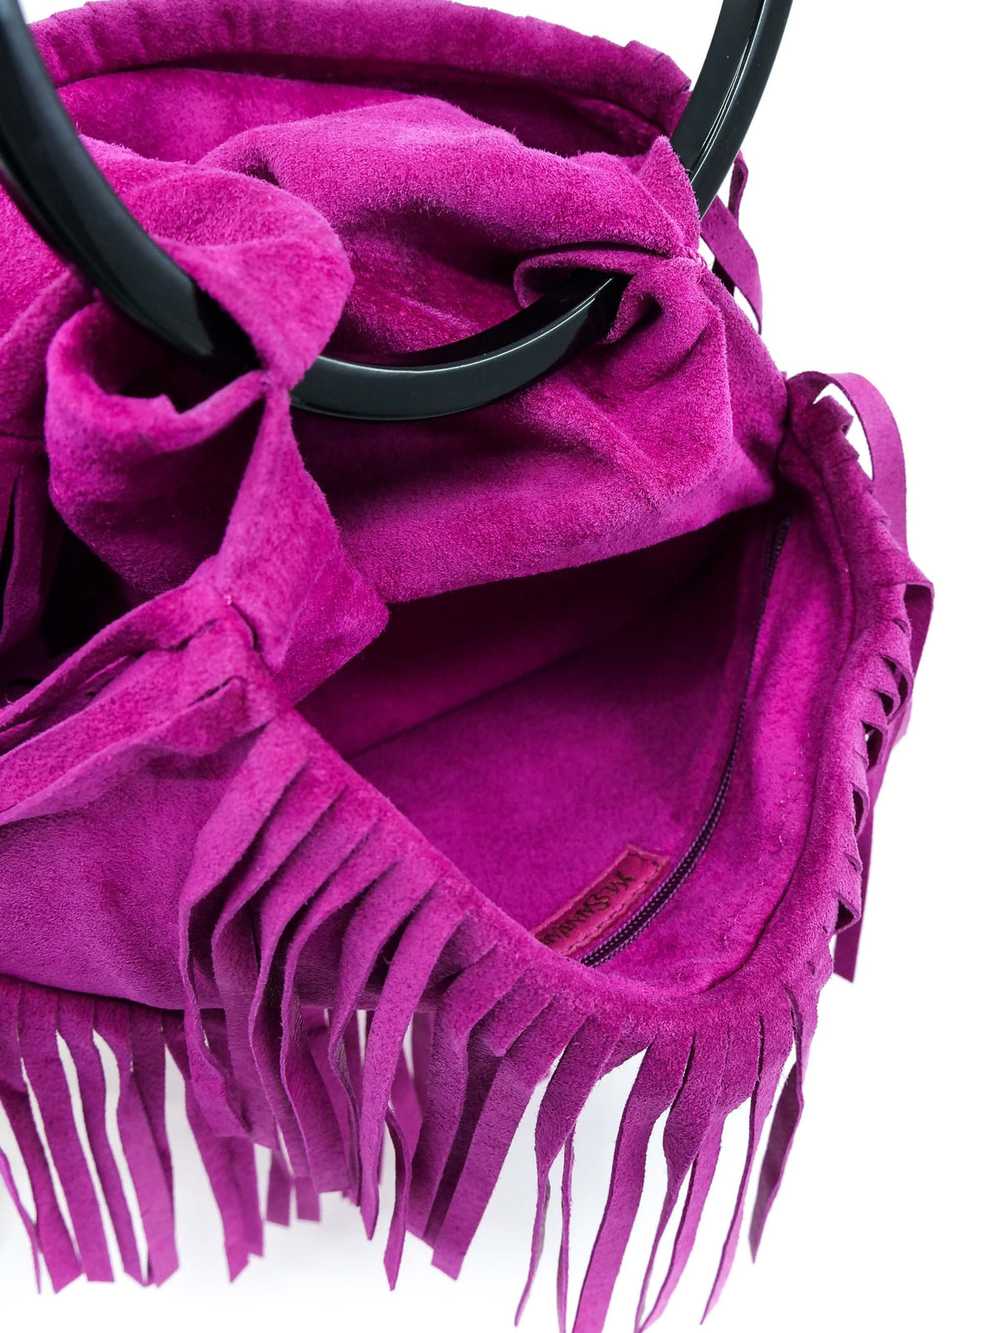 Yves Saint Laurent Fuschia Suede Fringed Bag - image 5